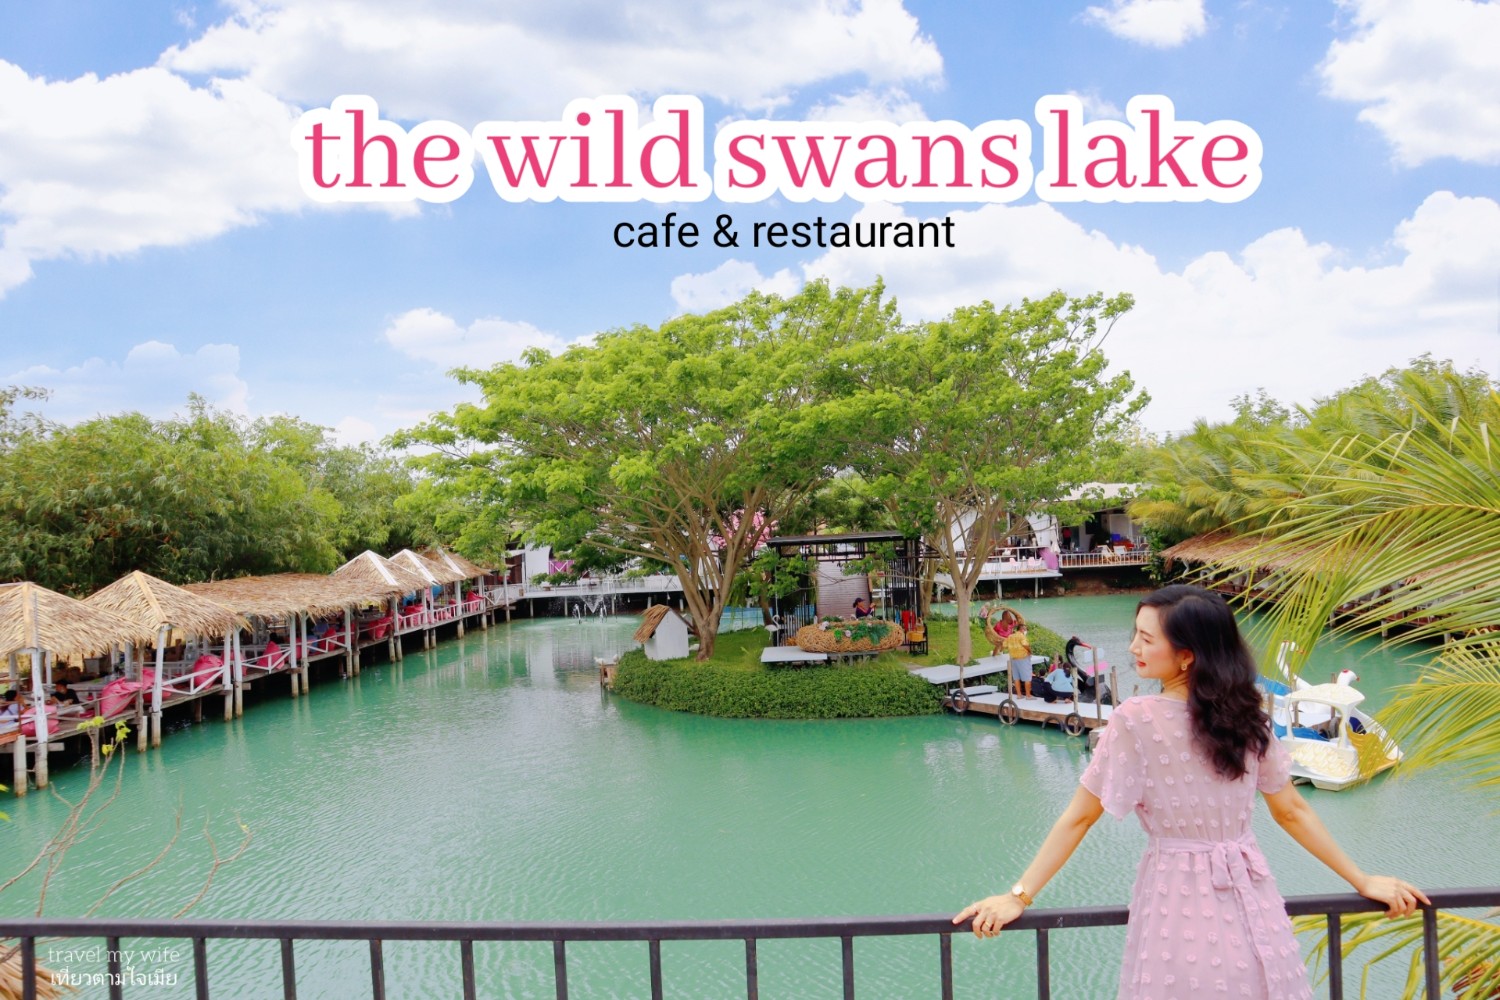 [SR] ร้าน the wild swans lake & restaurant pantip